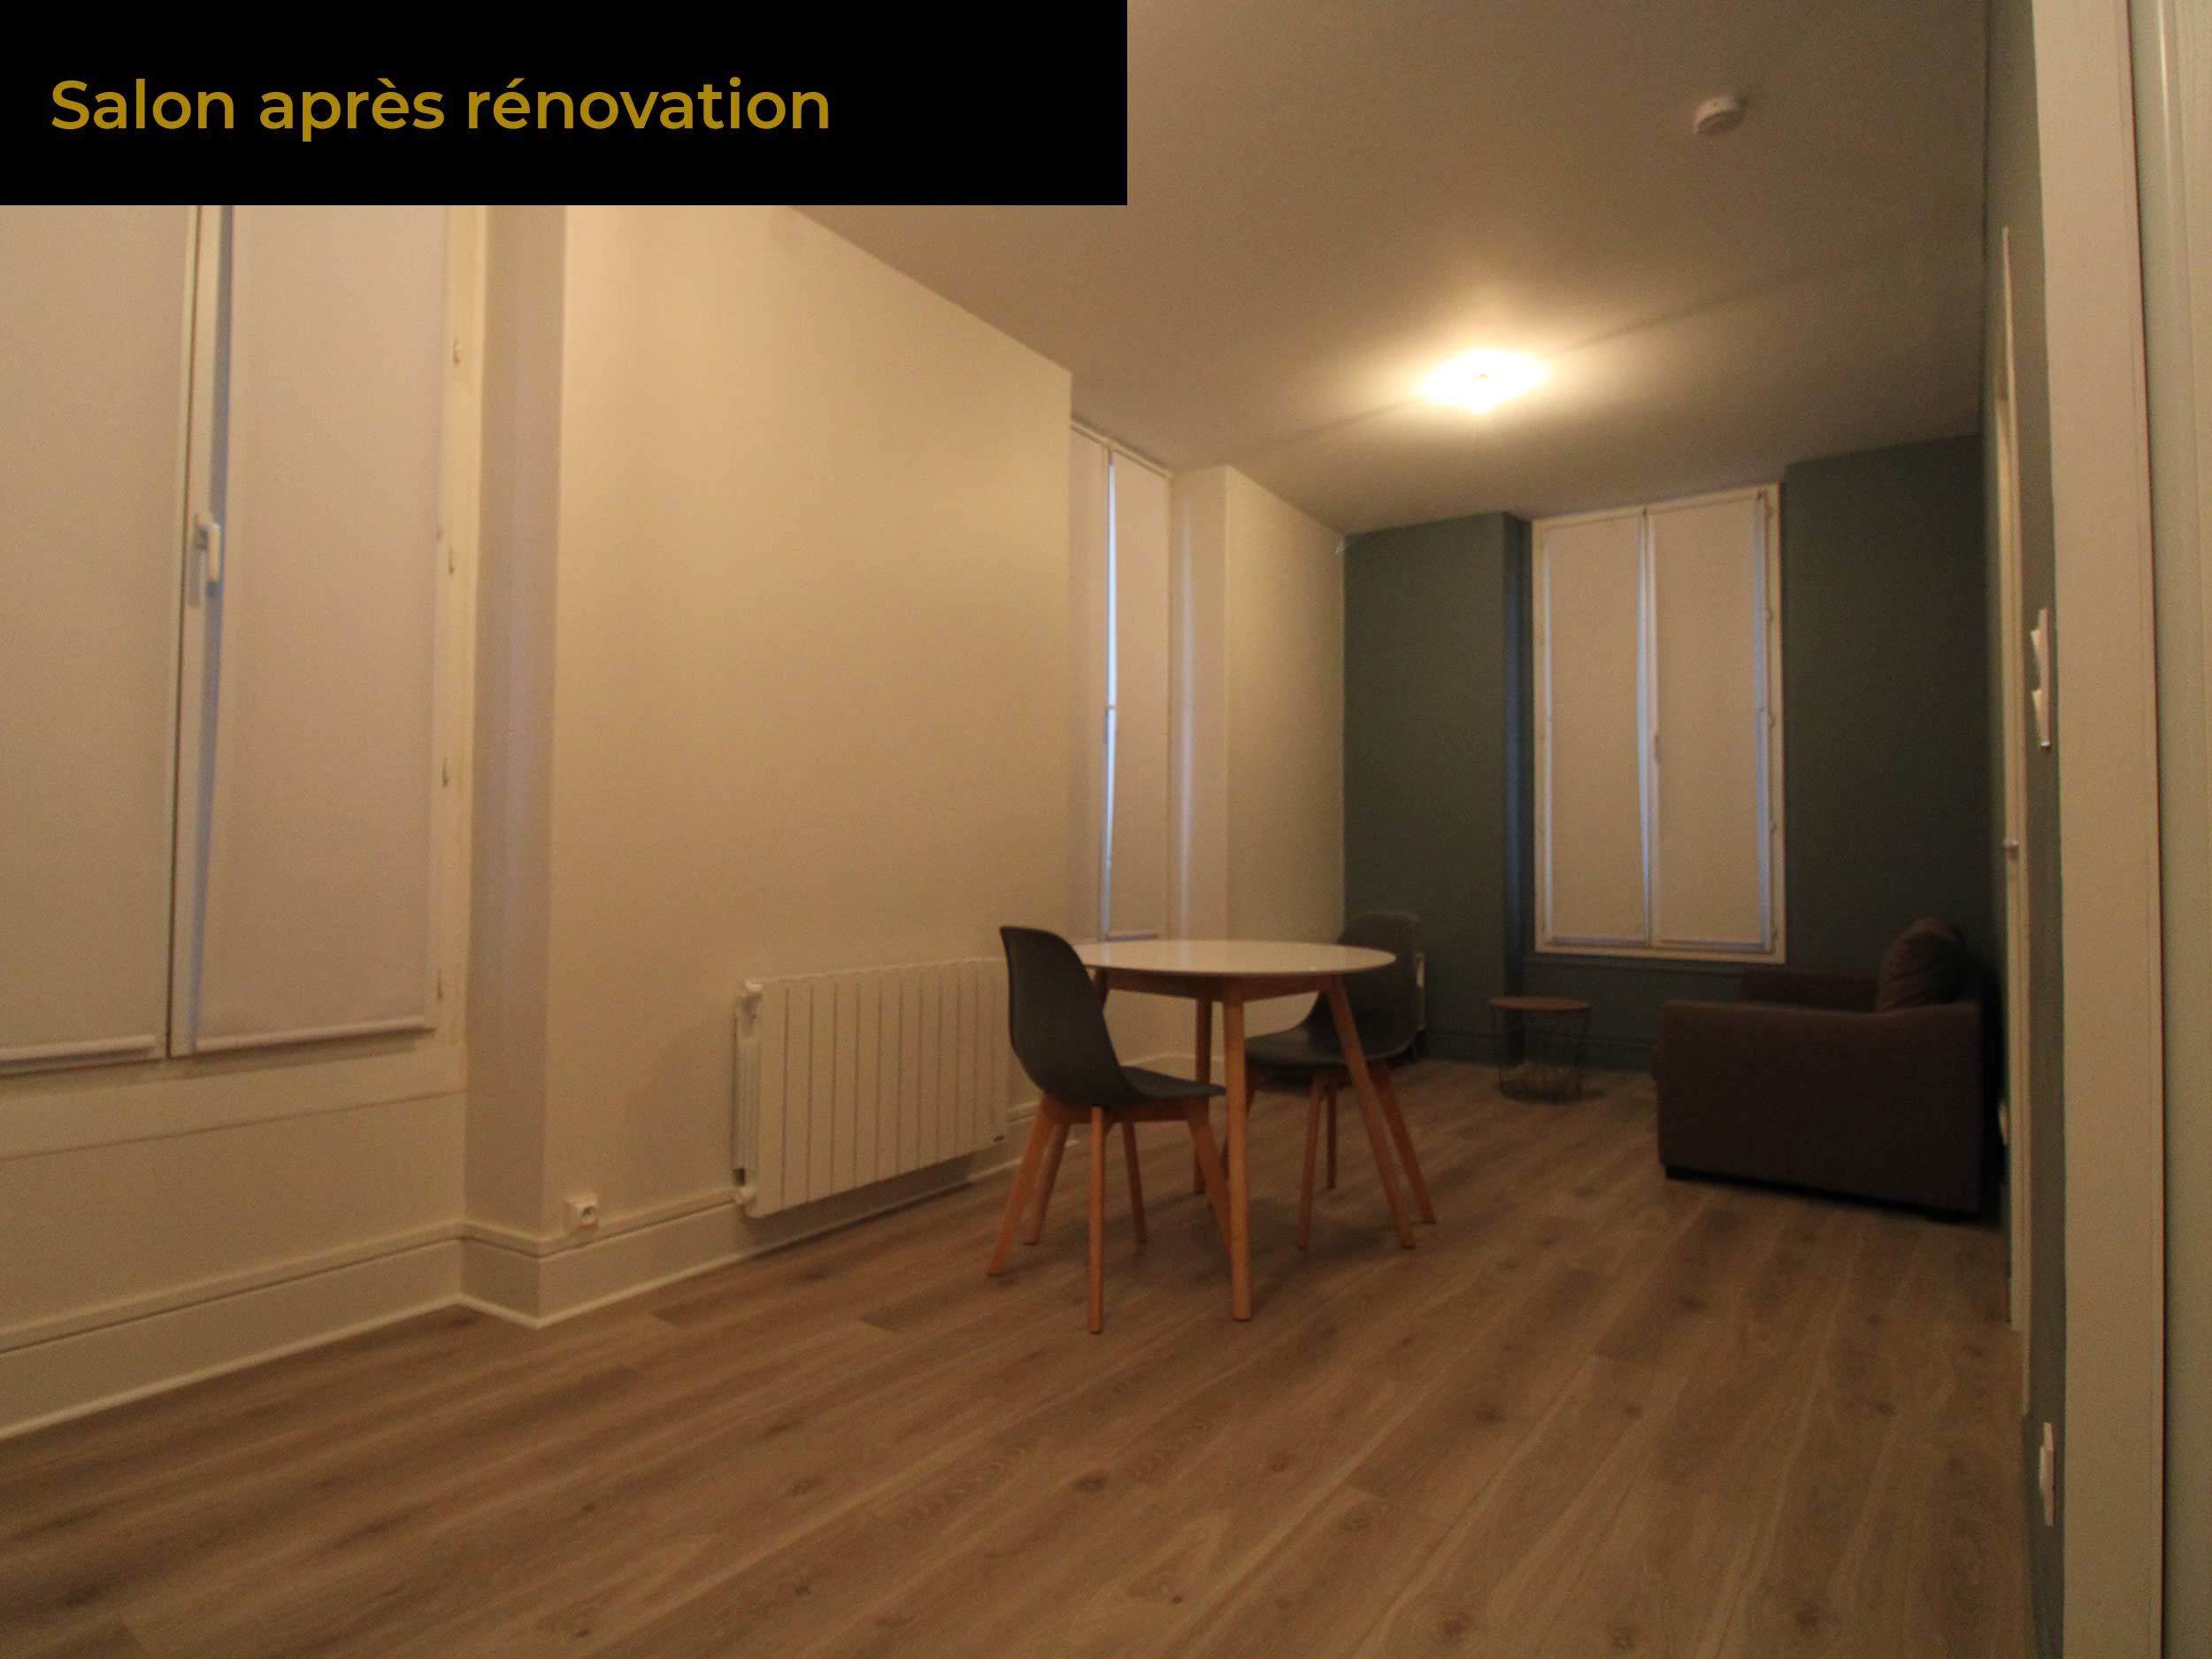 3a-transformer-un-plateau-en-appartement-salon-apres-renov